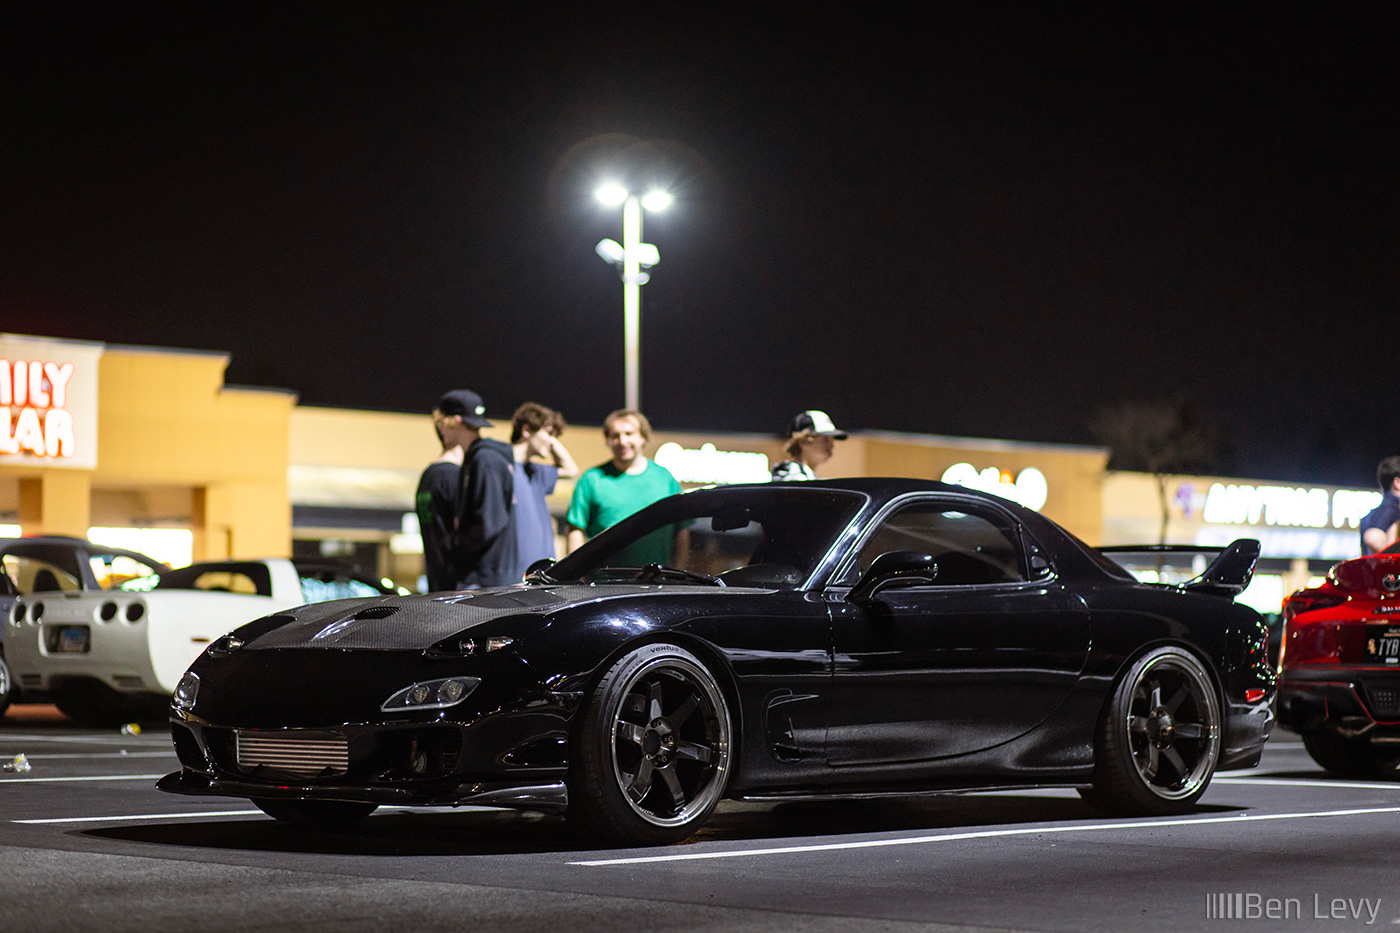 Black FD Mazda RX-7 at a Nighttime Car Meet